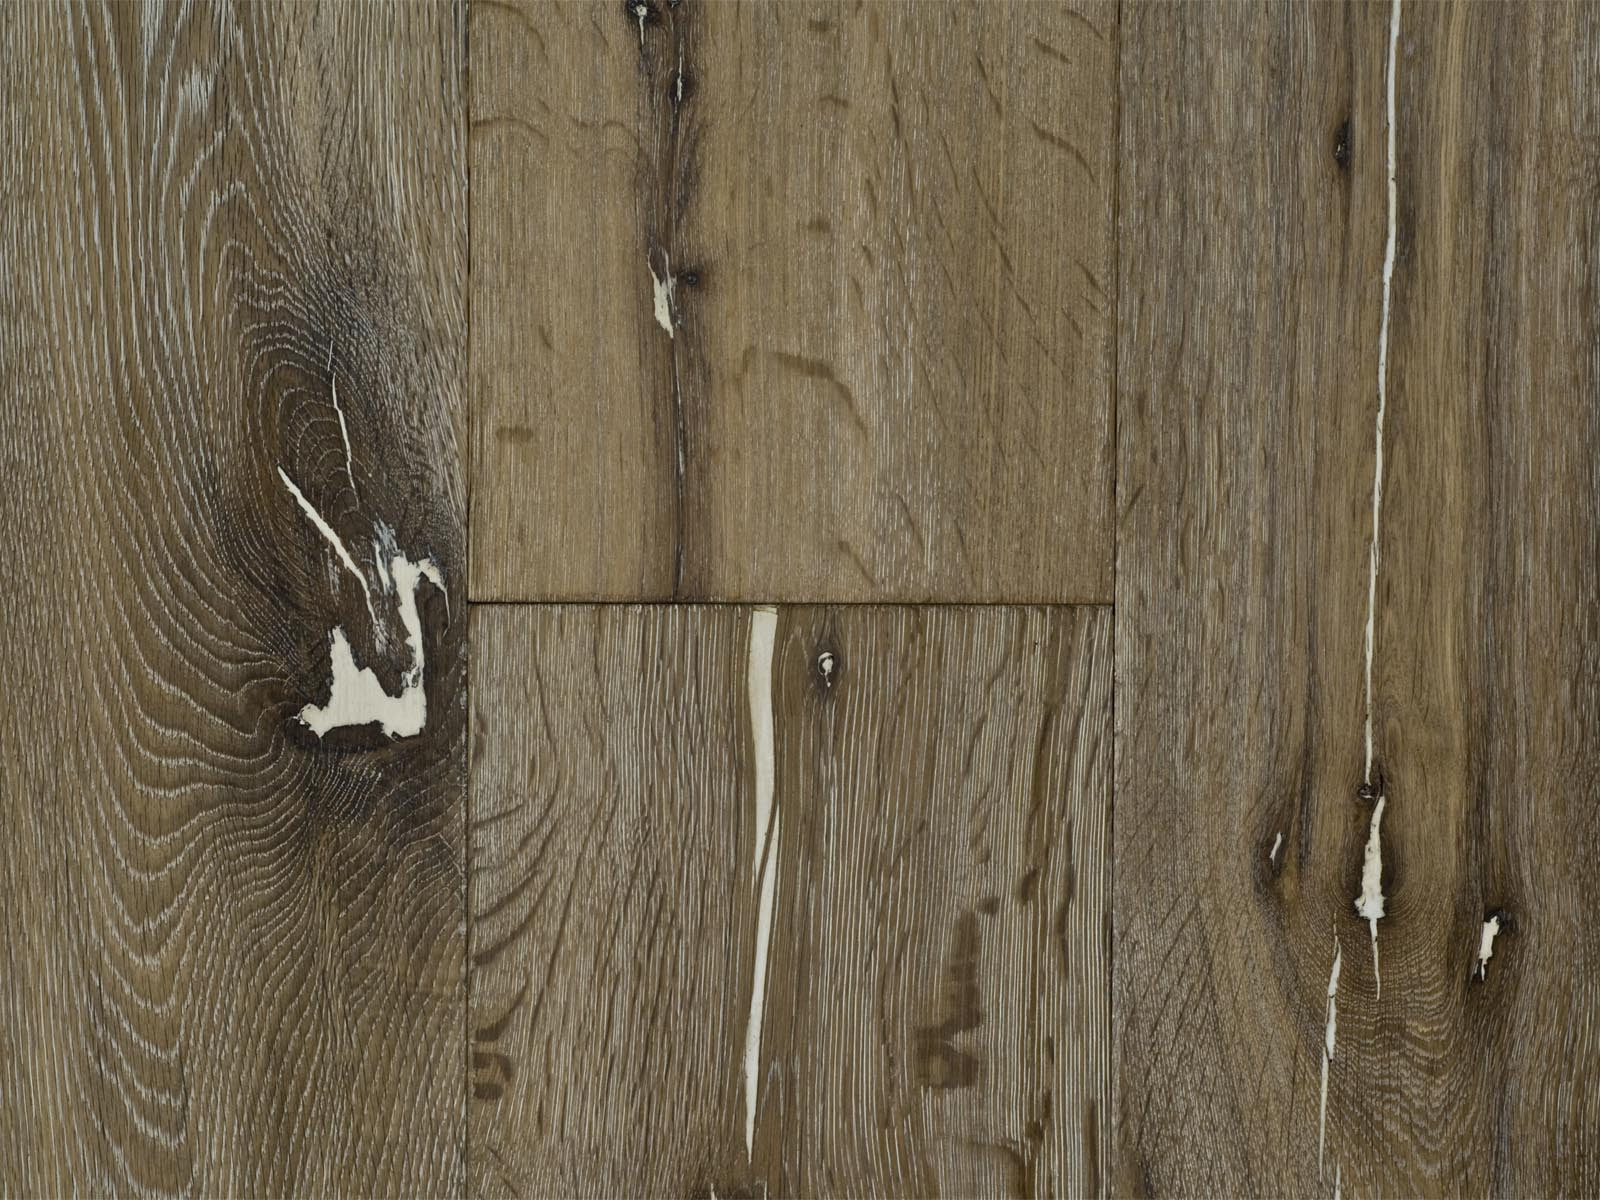 hardwood floor repair melbourne of provenza hardwood flooring houston tx discount premium wood floors throughout st moritz european oak